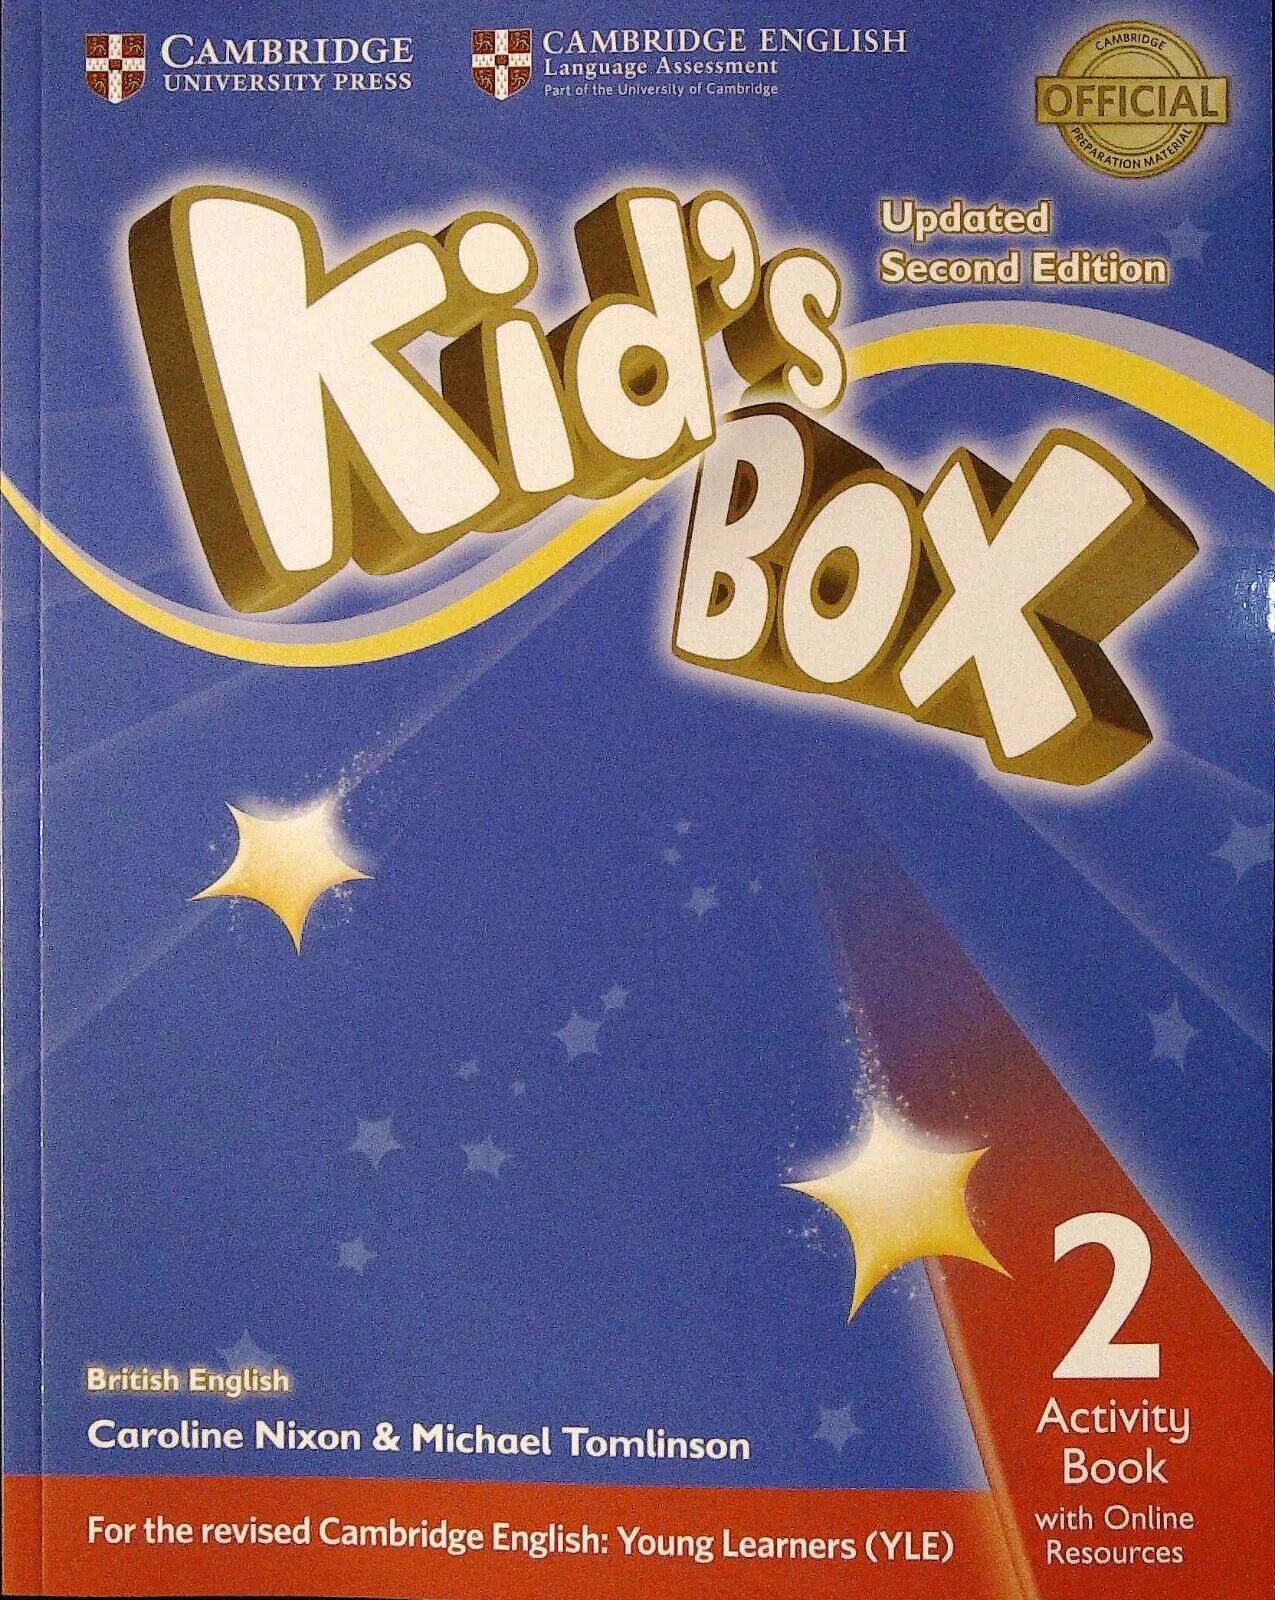 Activity book 7 2. Cambridge University Press Kid's Box. Активити бук. Kid's Box 1 pupil's book 2nd Edition. Kids Box 3 activity book. Kids Box 2 second Edition.